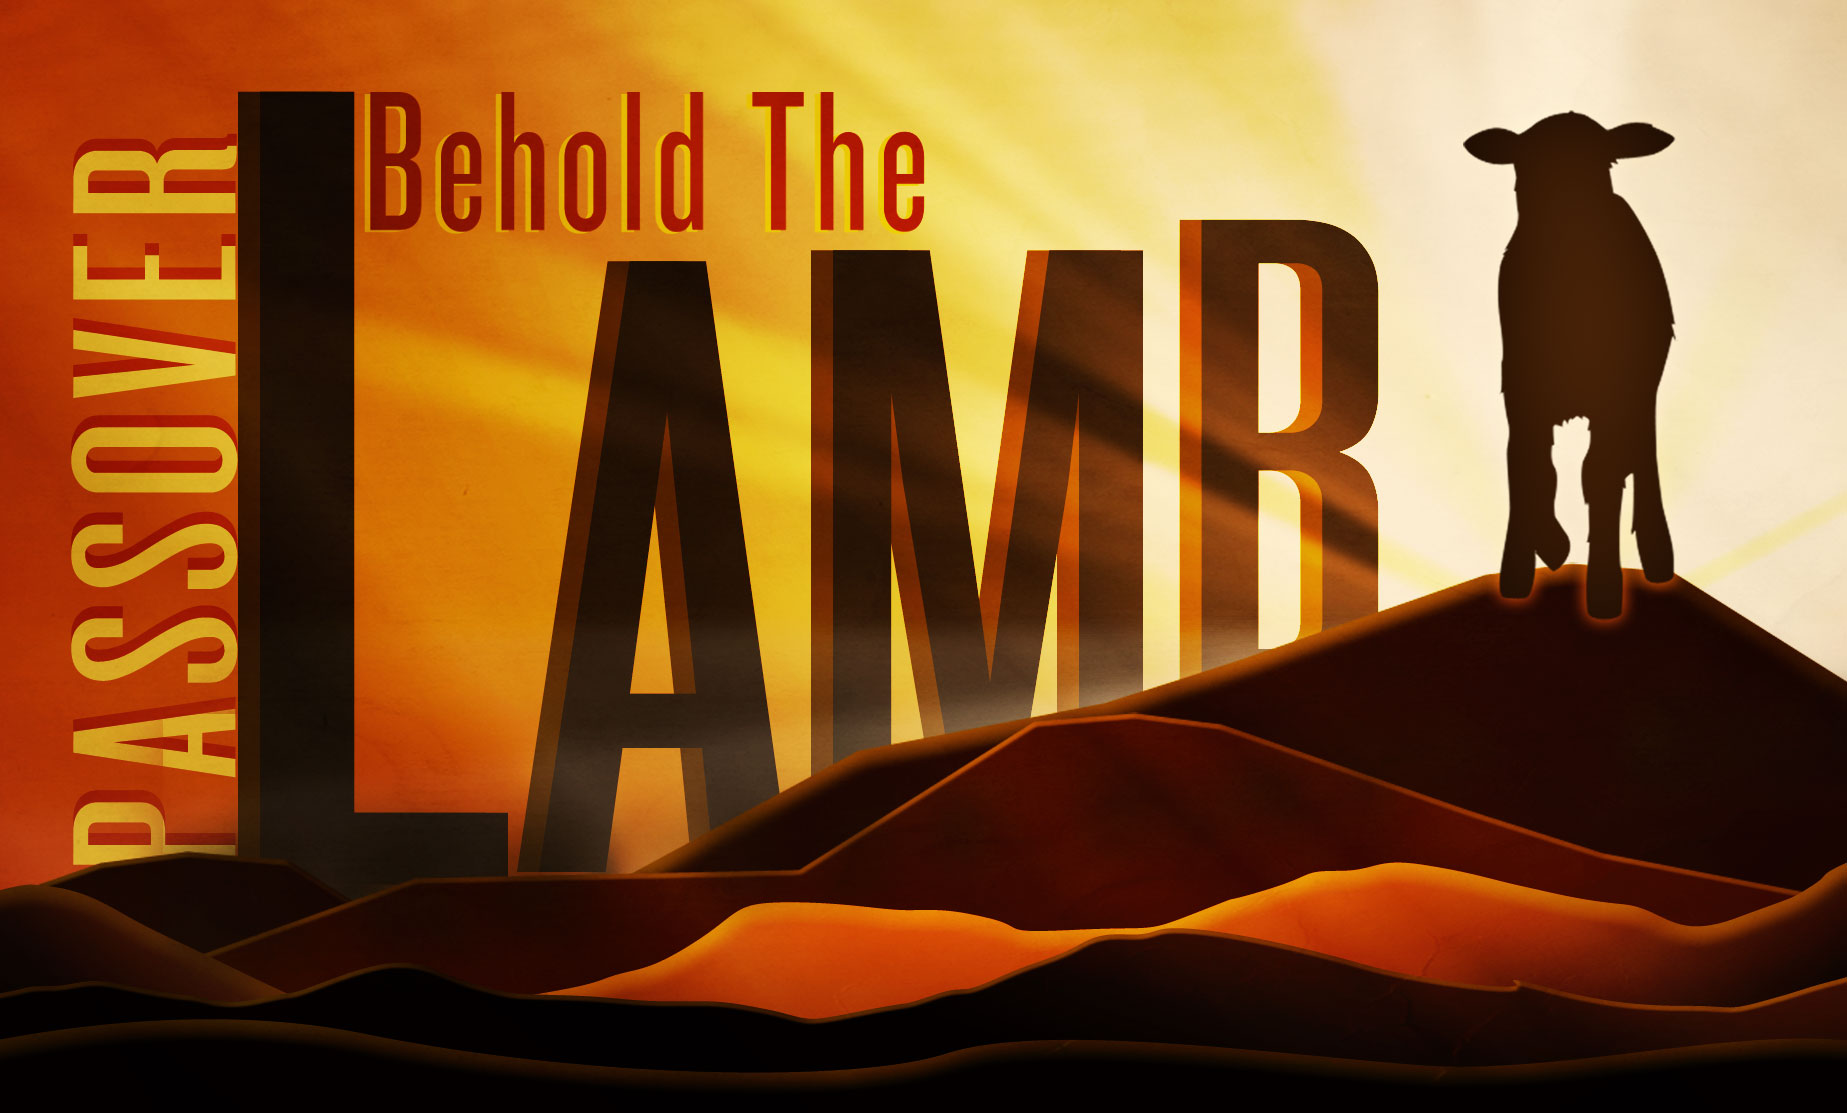 Jesus - the True Passover Lamb